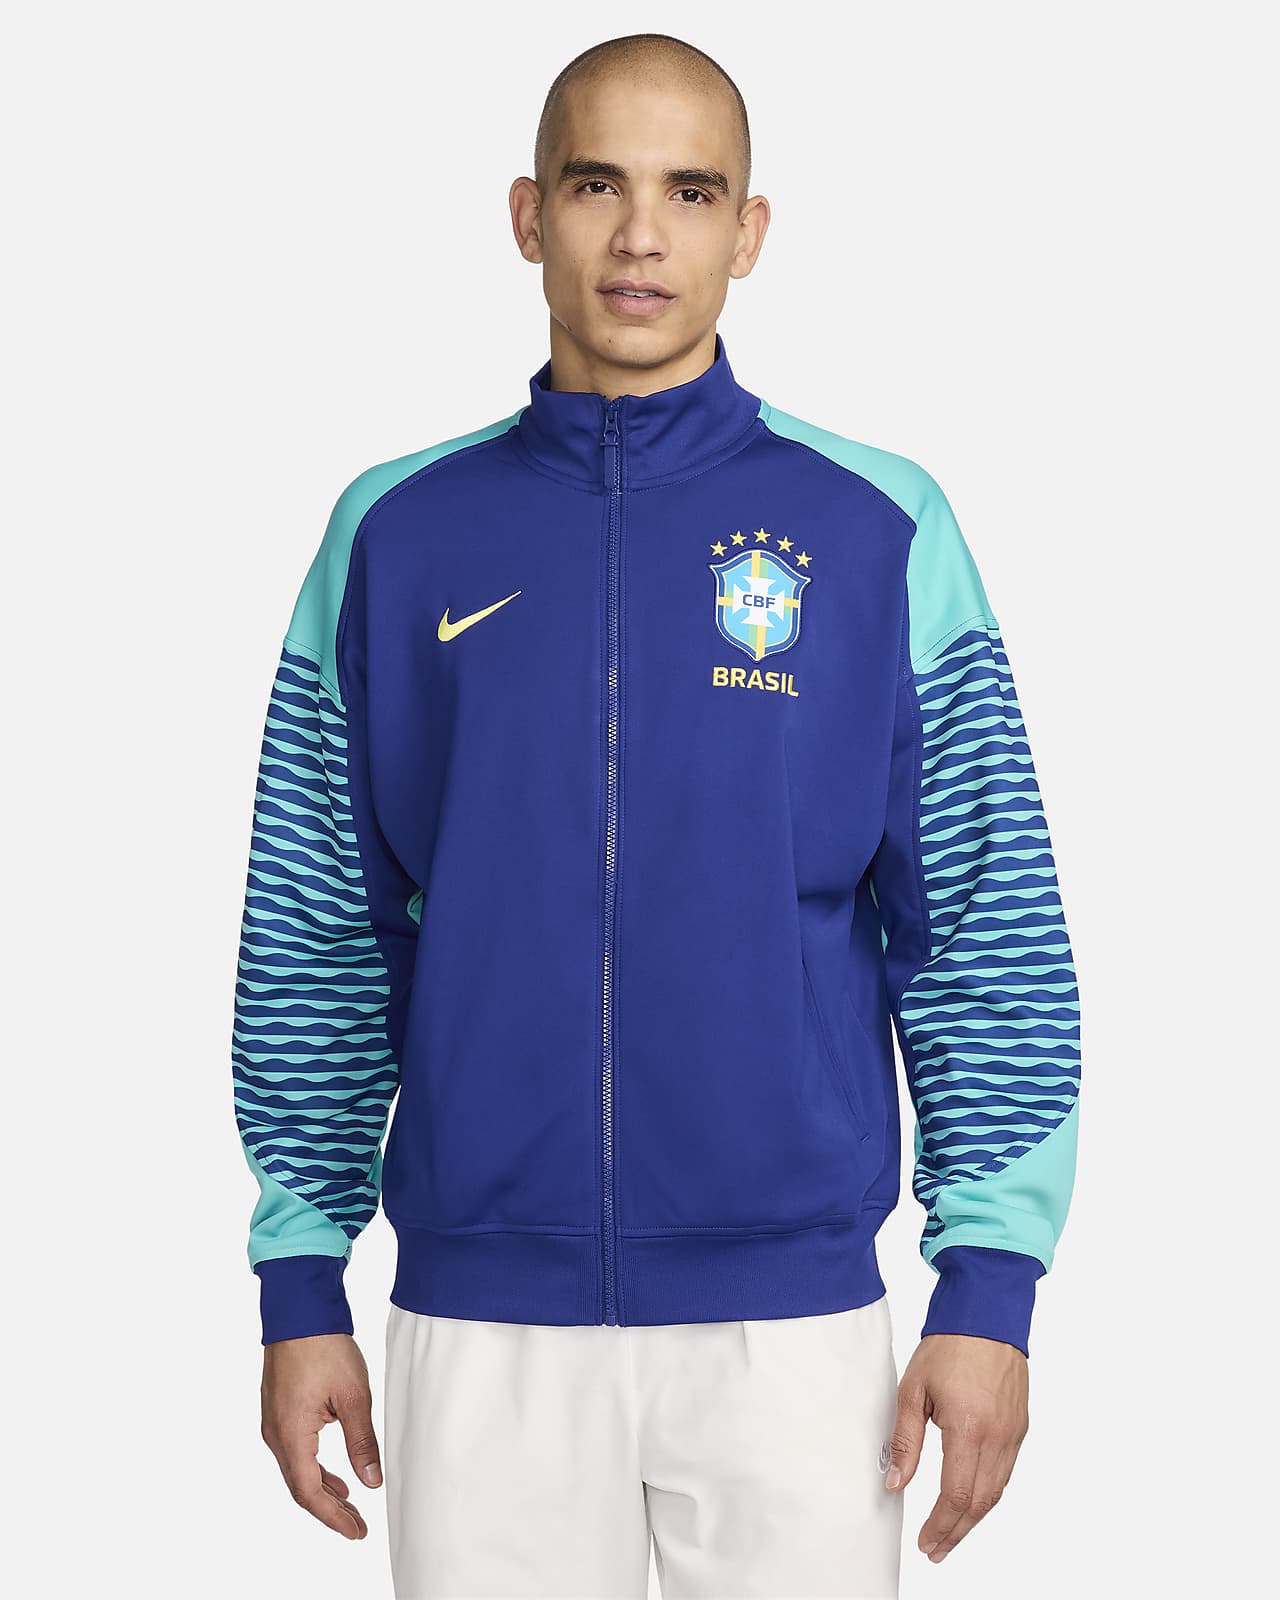 Brazil Strike Men's Nike Dri-FIT Soccer Jacket